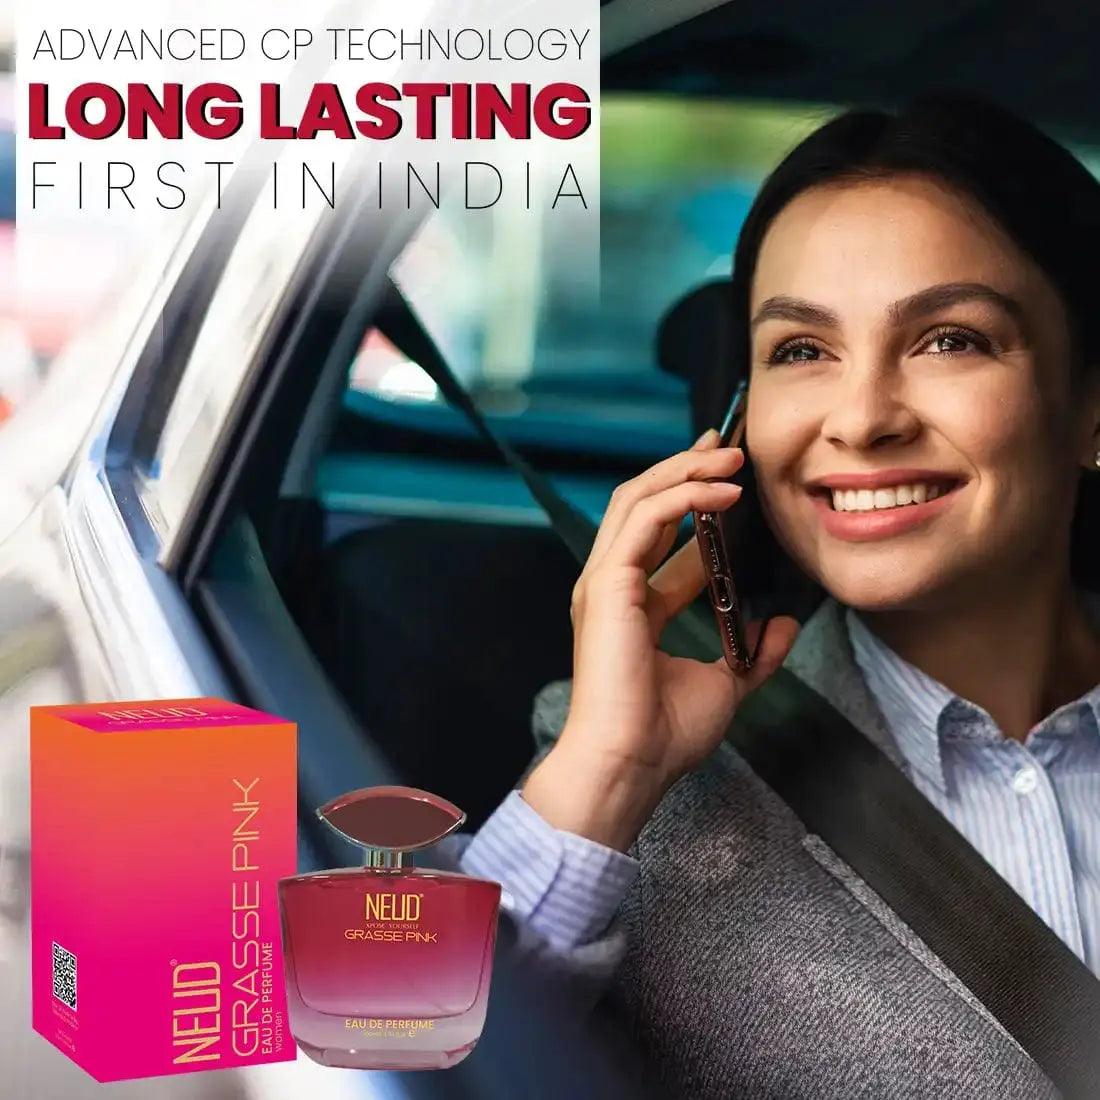 NEUD Grasse Pink Luxury Perfume for Modern Women Long Lasting EDP - 100ml